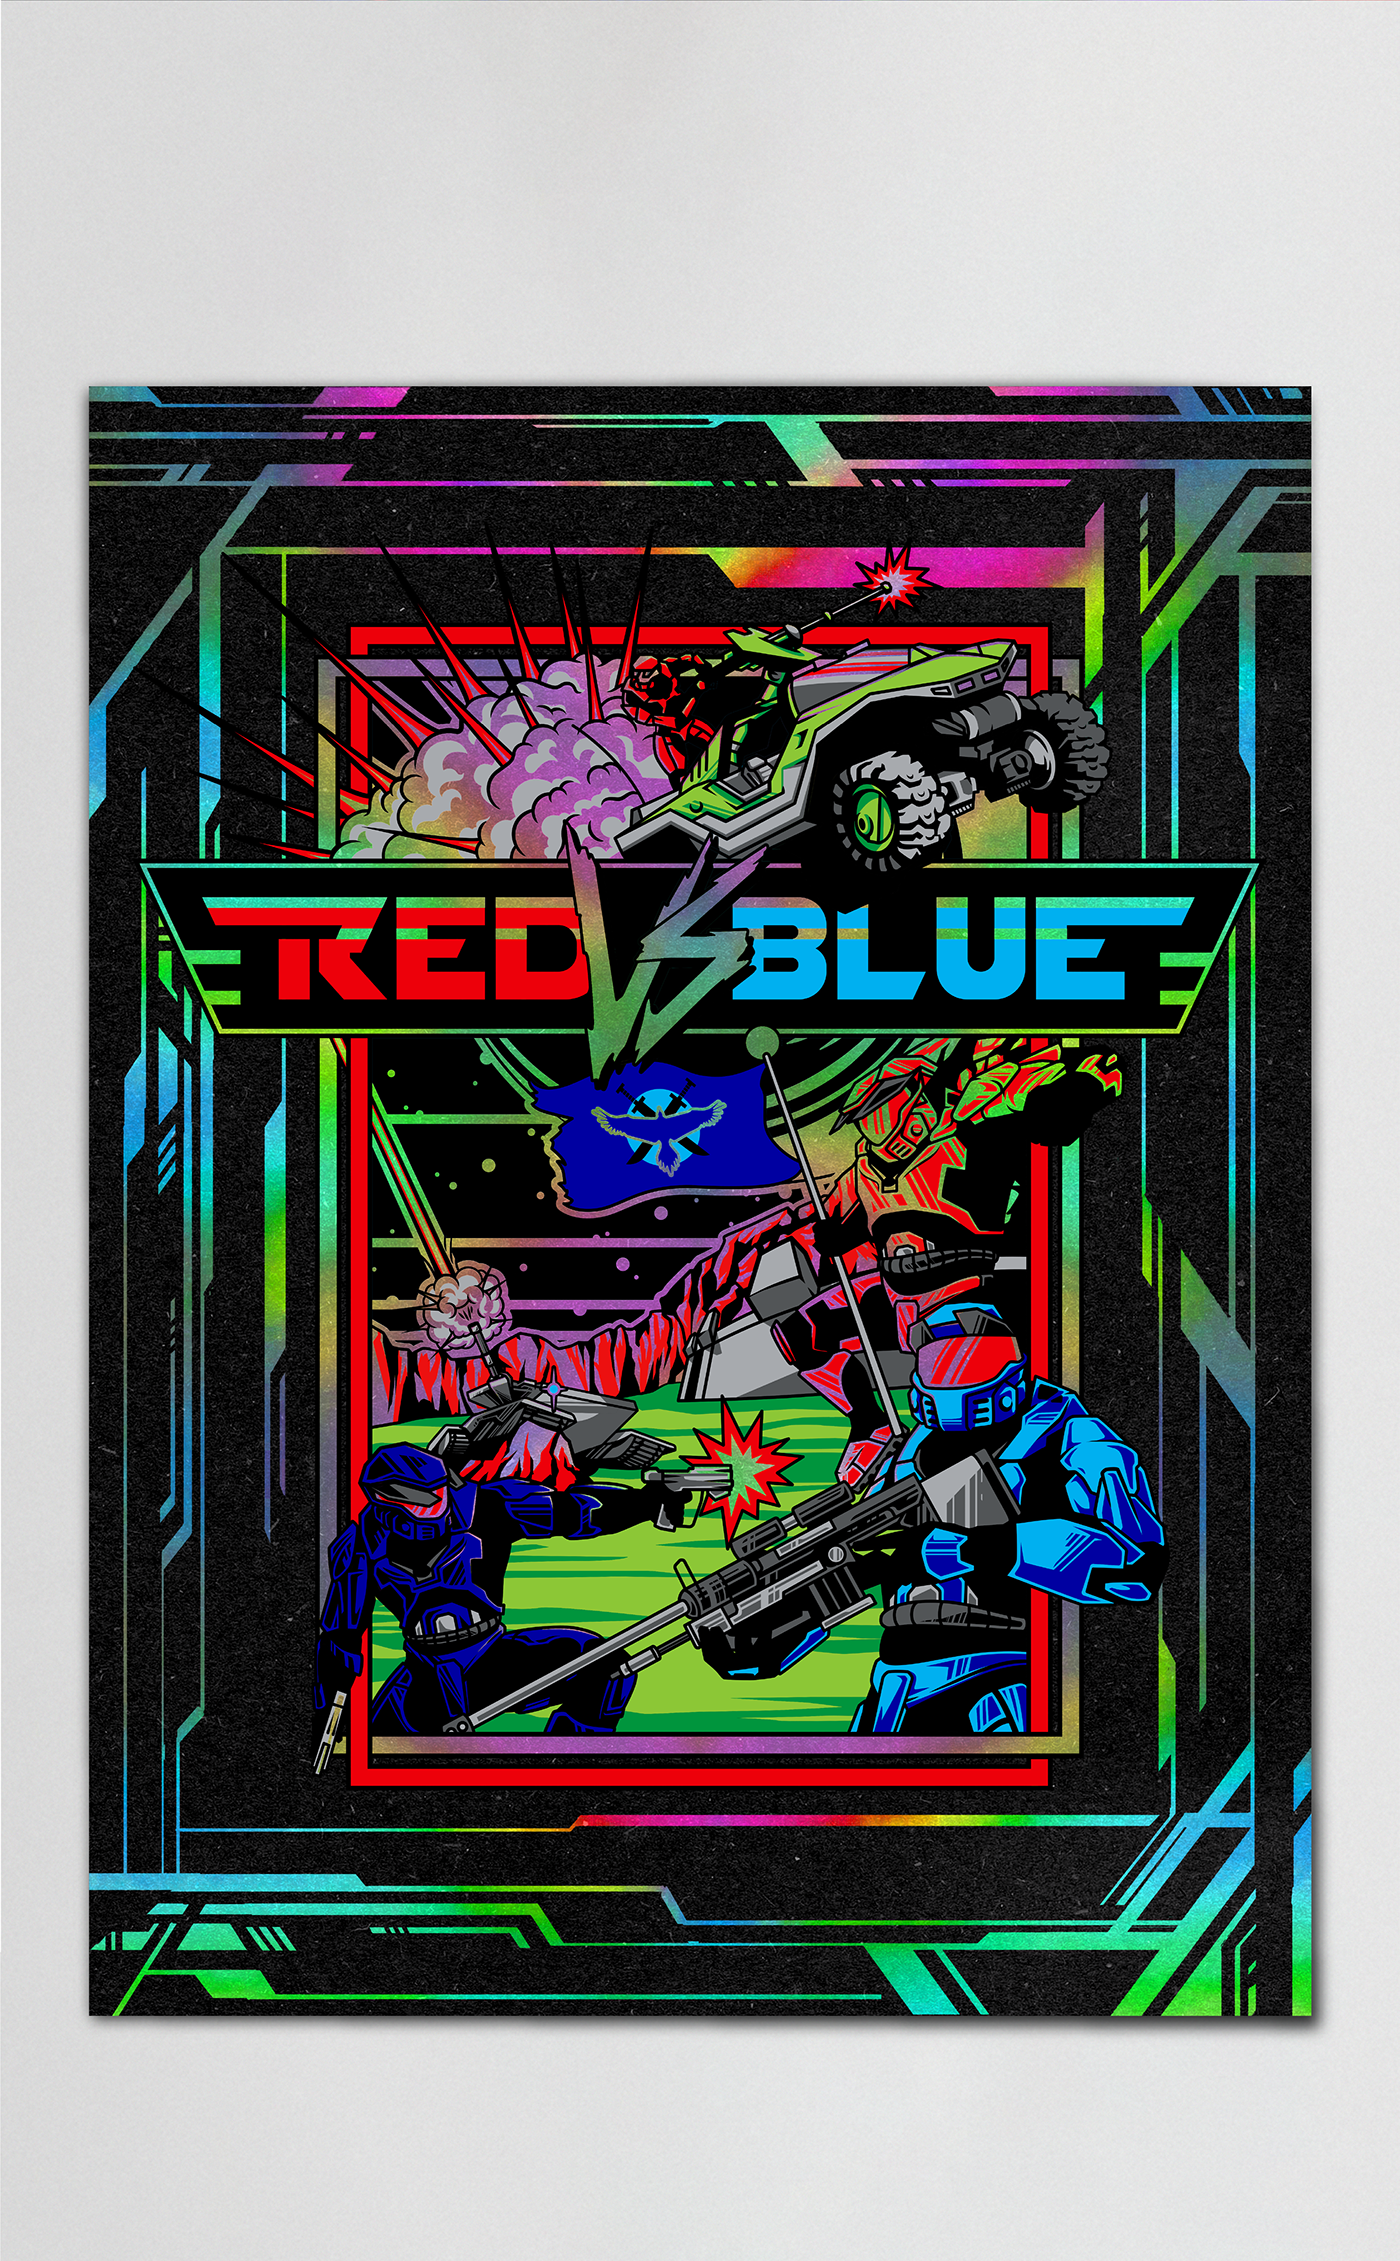 Rooster Teeth rvb red vs blue Halo Microsoft arcade poster Merch shirt Holofoil